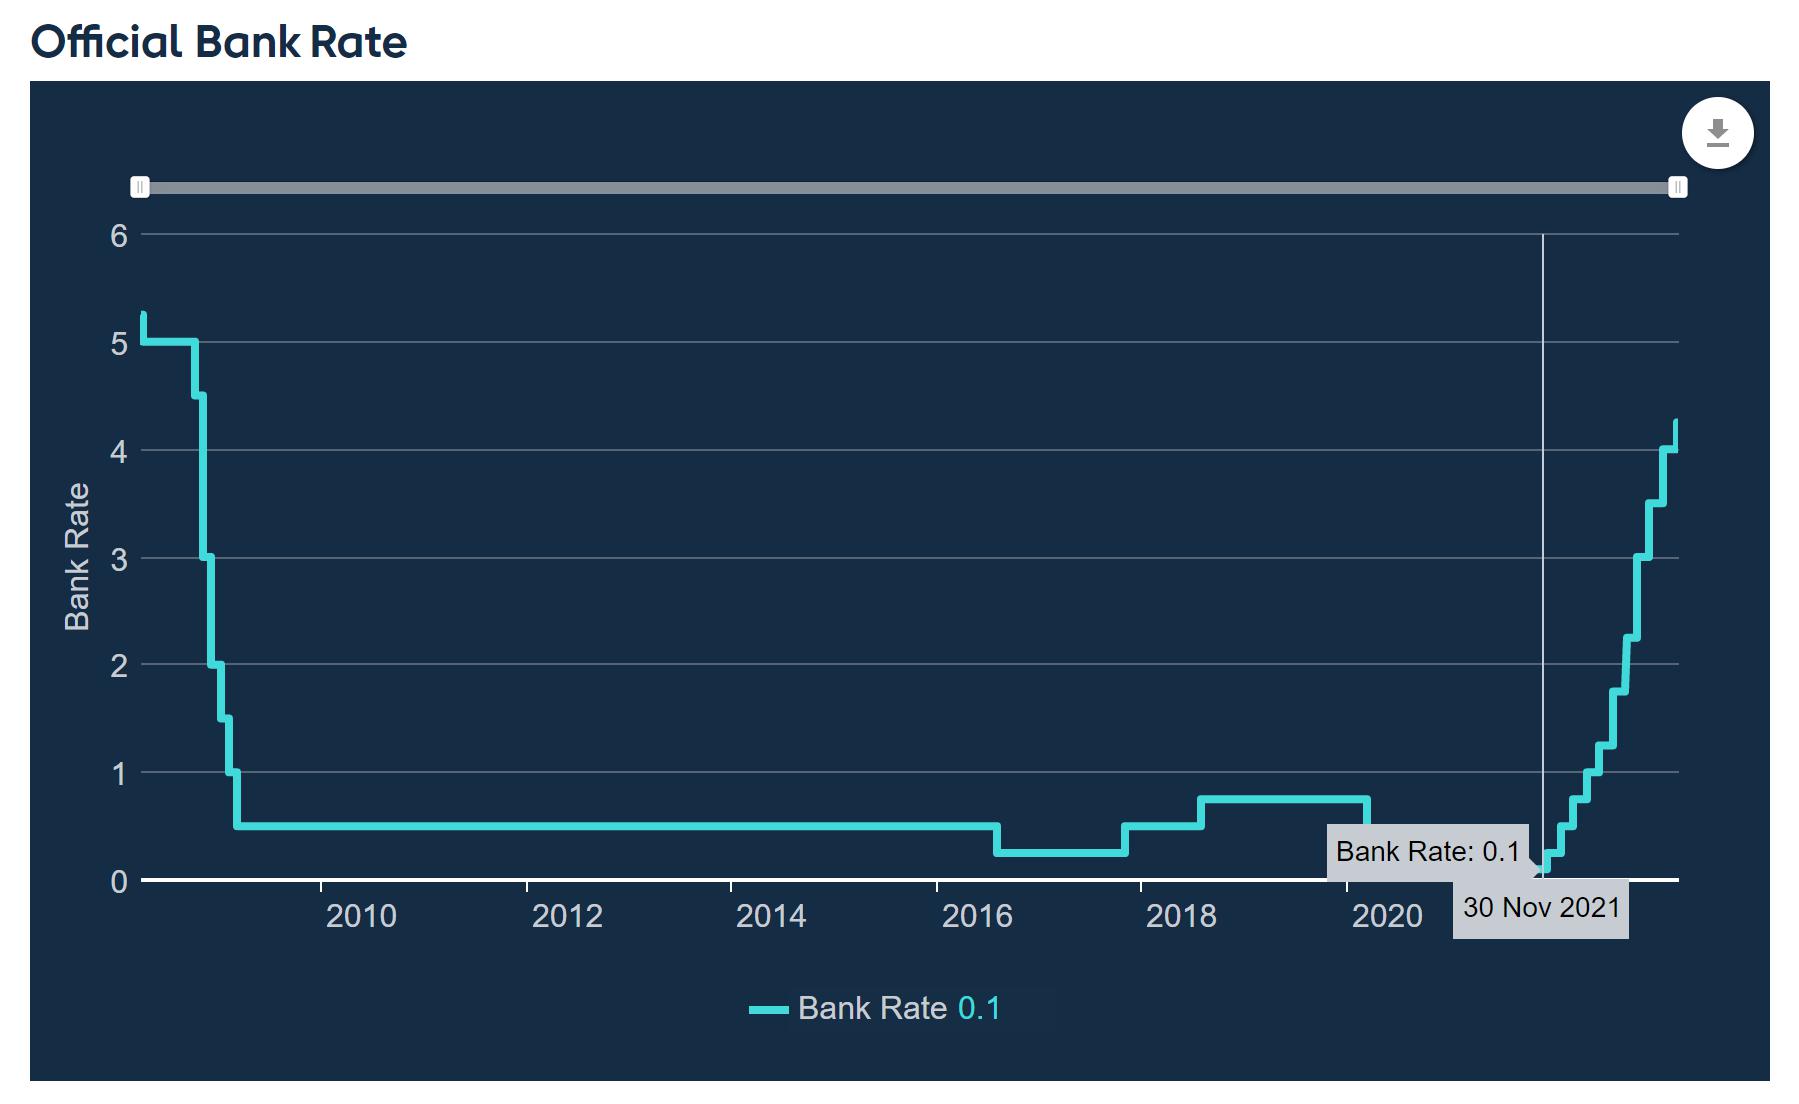 UK Bank of England Base Rate graph